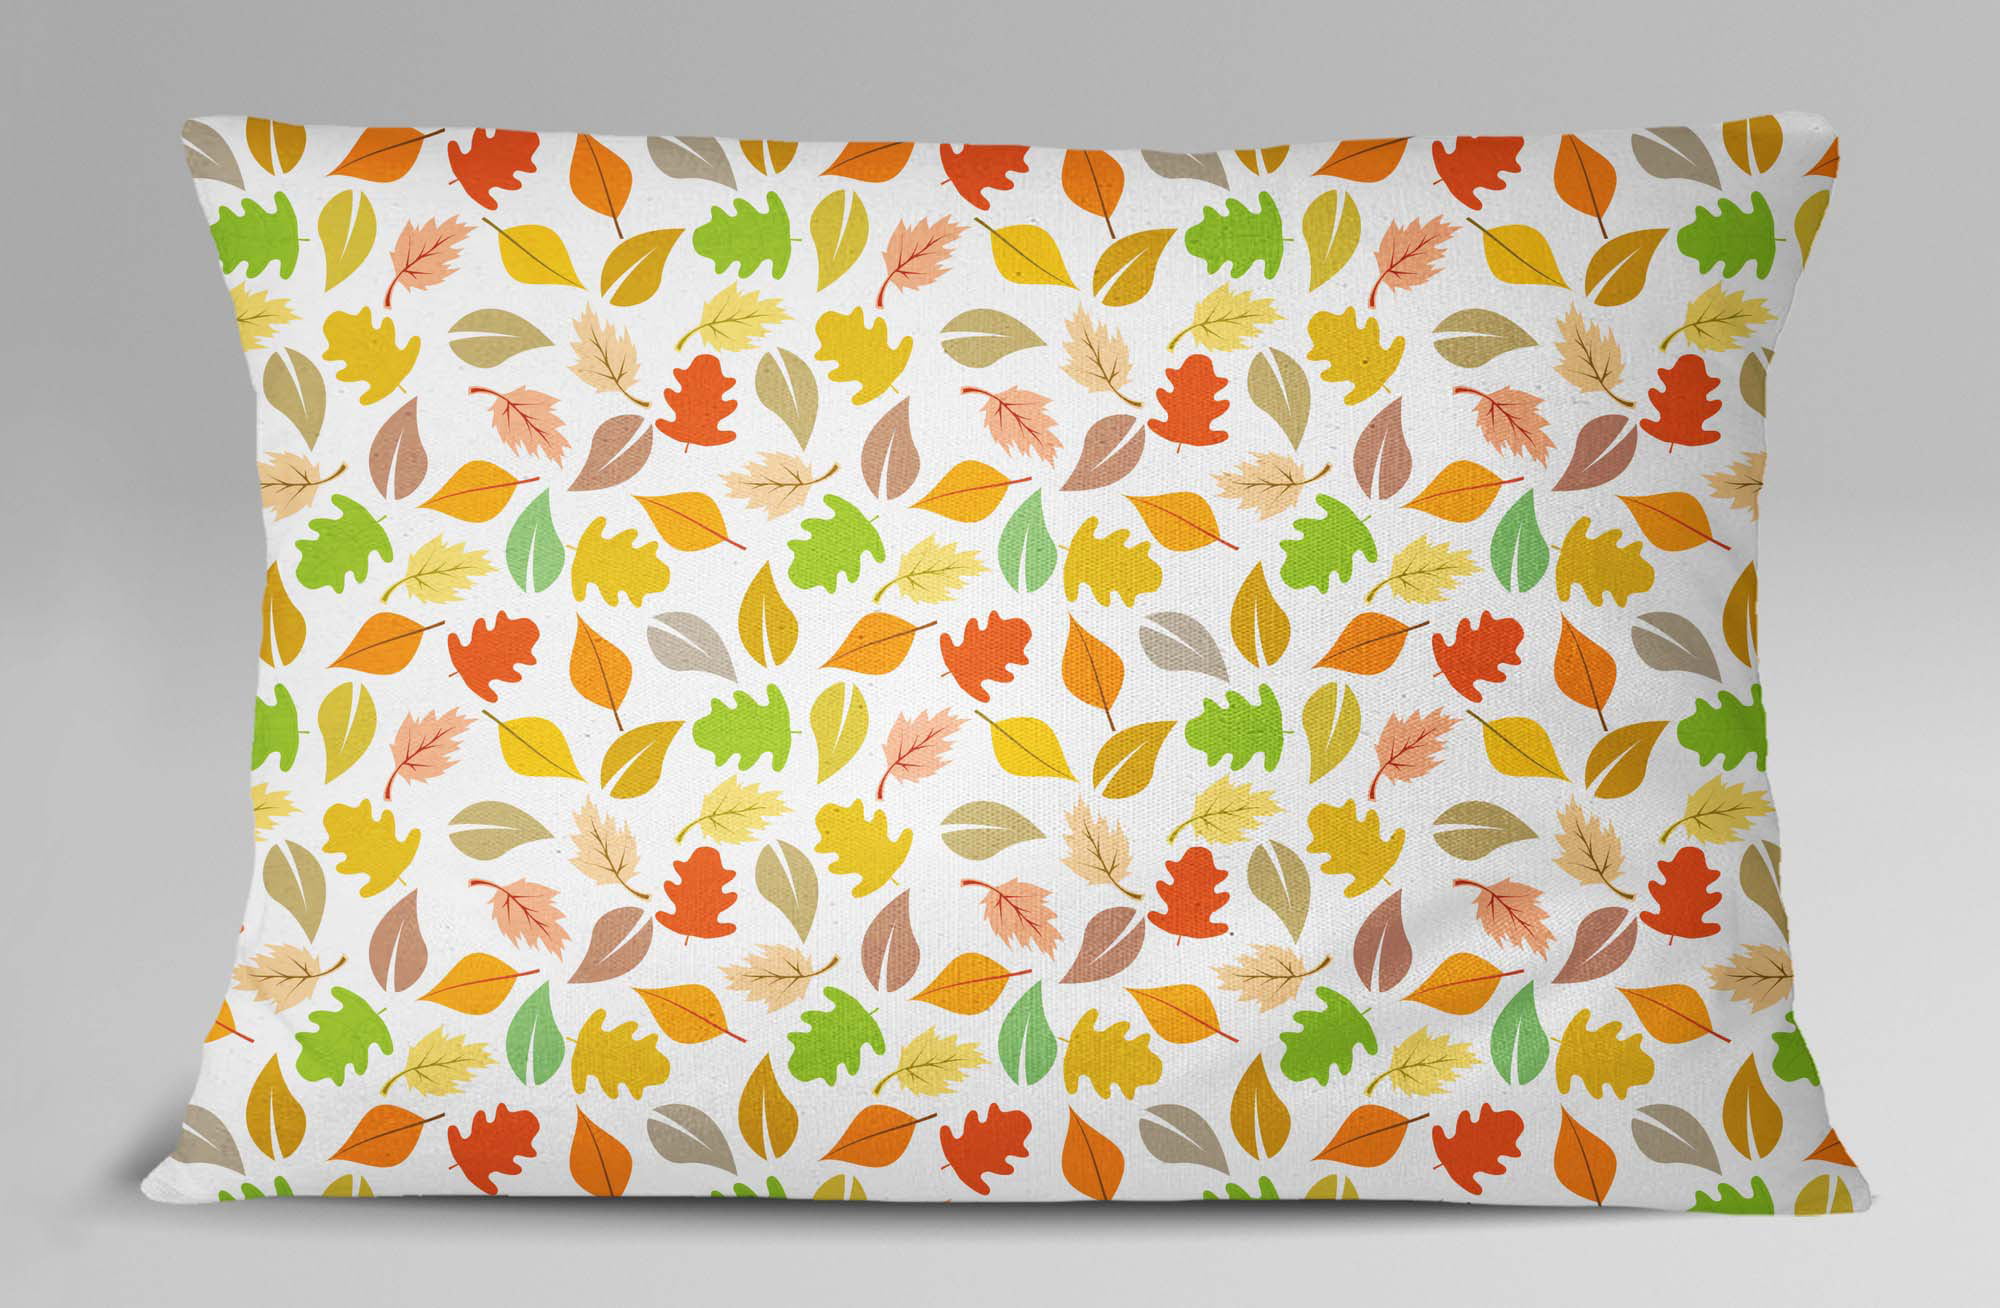 Details about   S4Sassy Sofa Pillow Sham Leaf Print 2 Pcs Cotton Poplin Home Decor Cushion Cover 